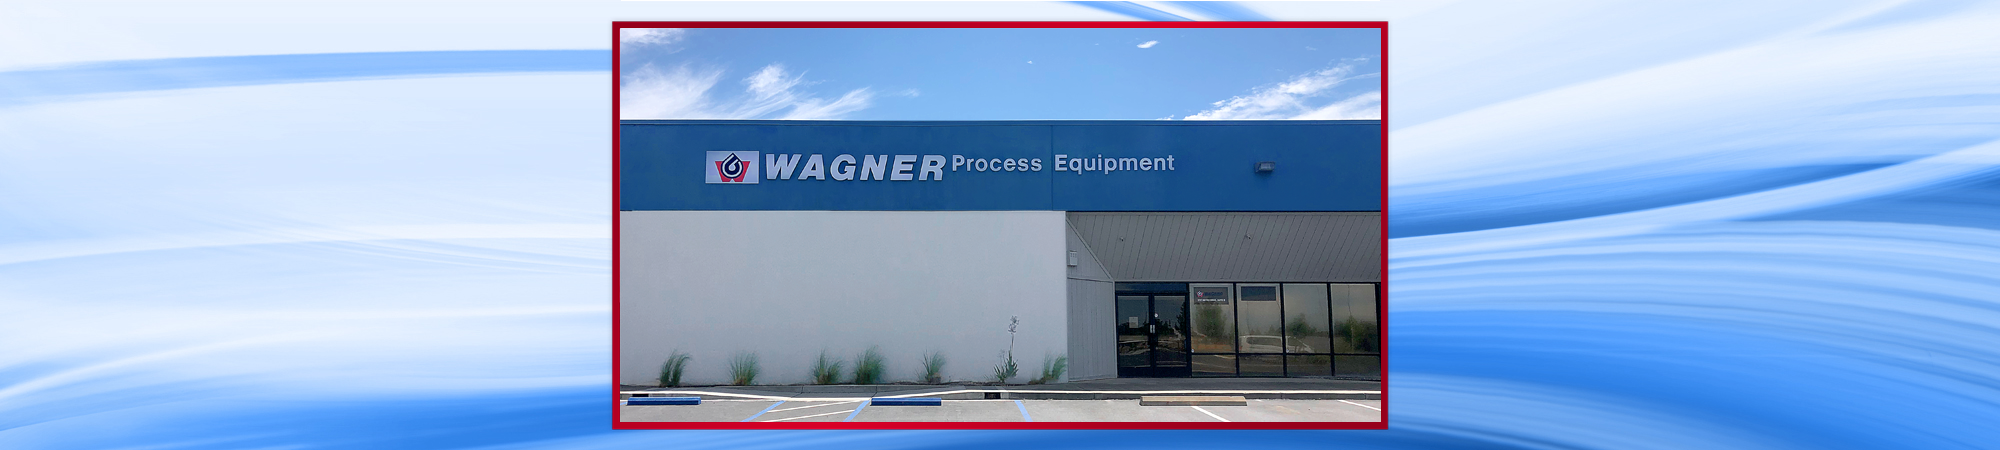 Wagner Process Equipment